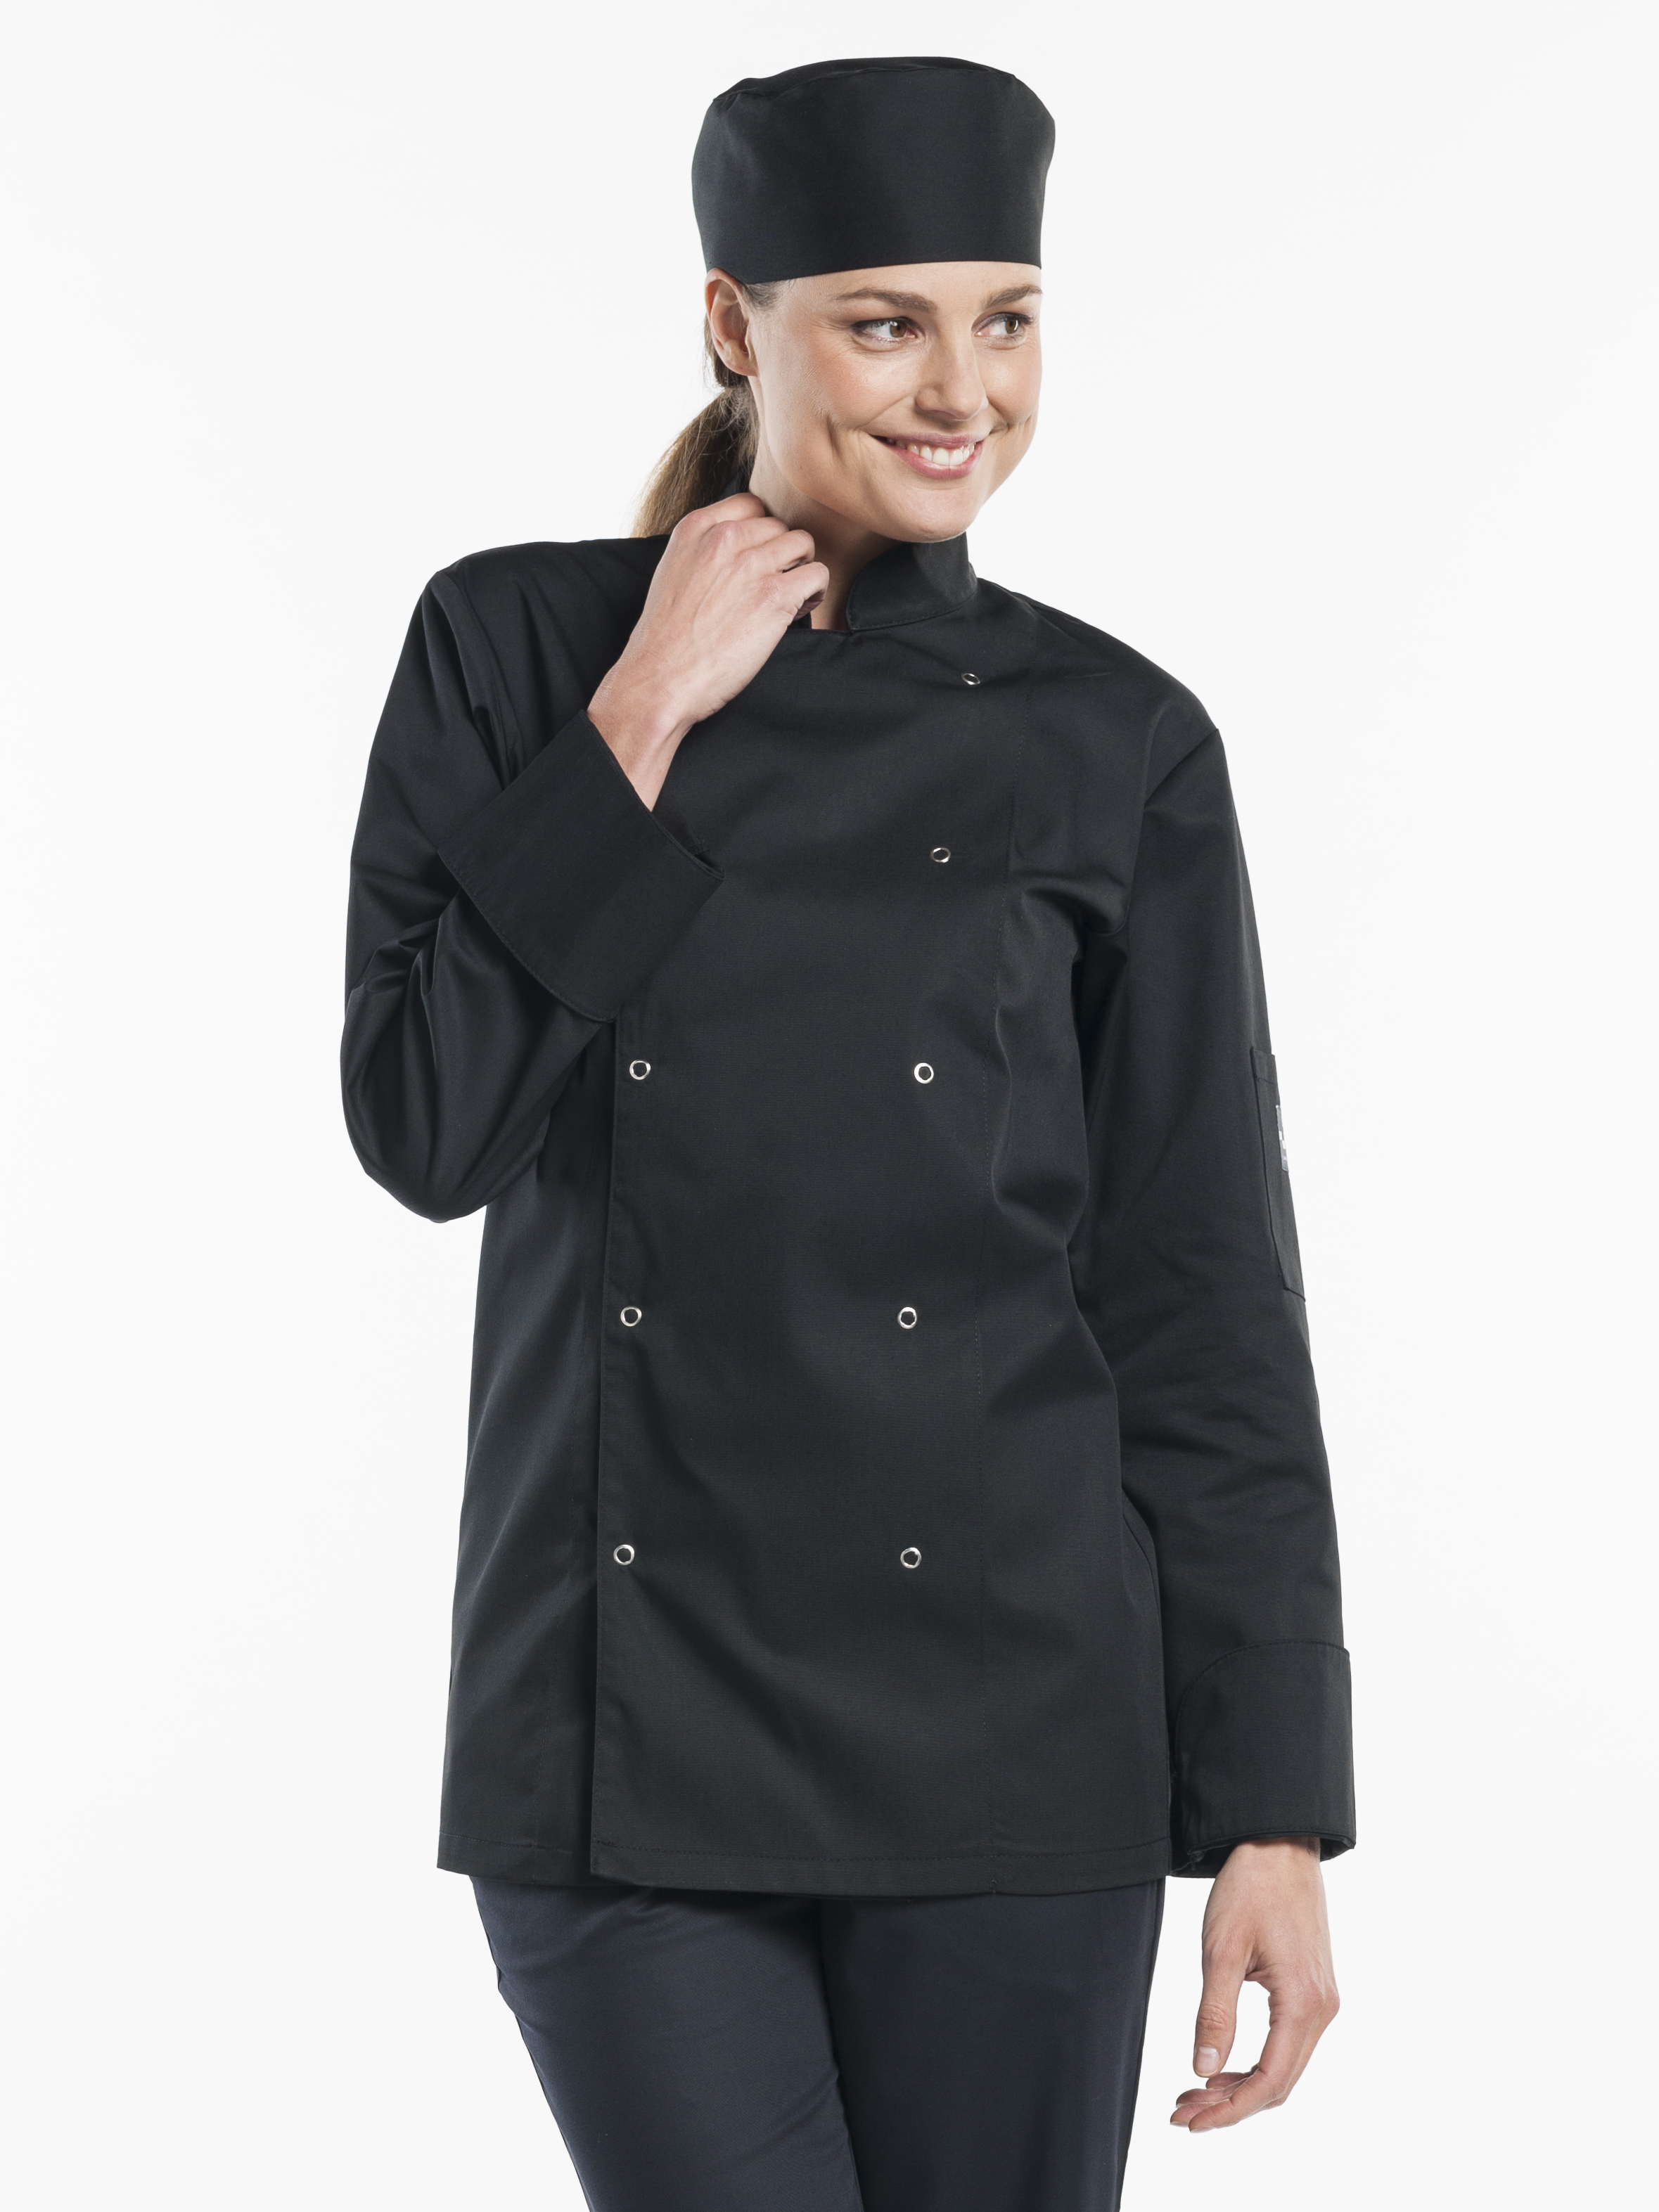 69625 Chef jacket hilton poco black maat xxl